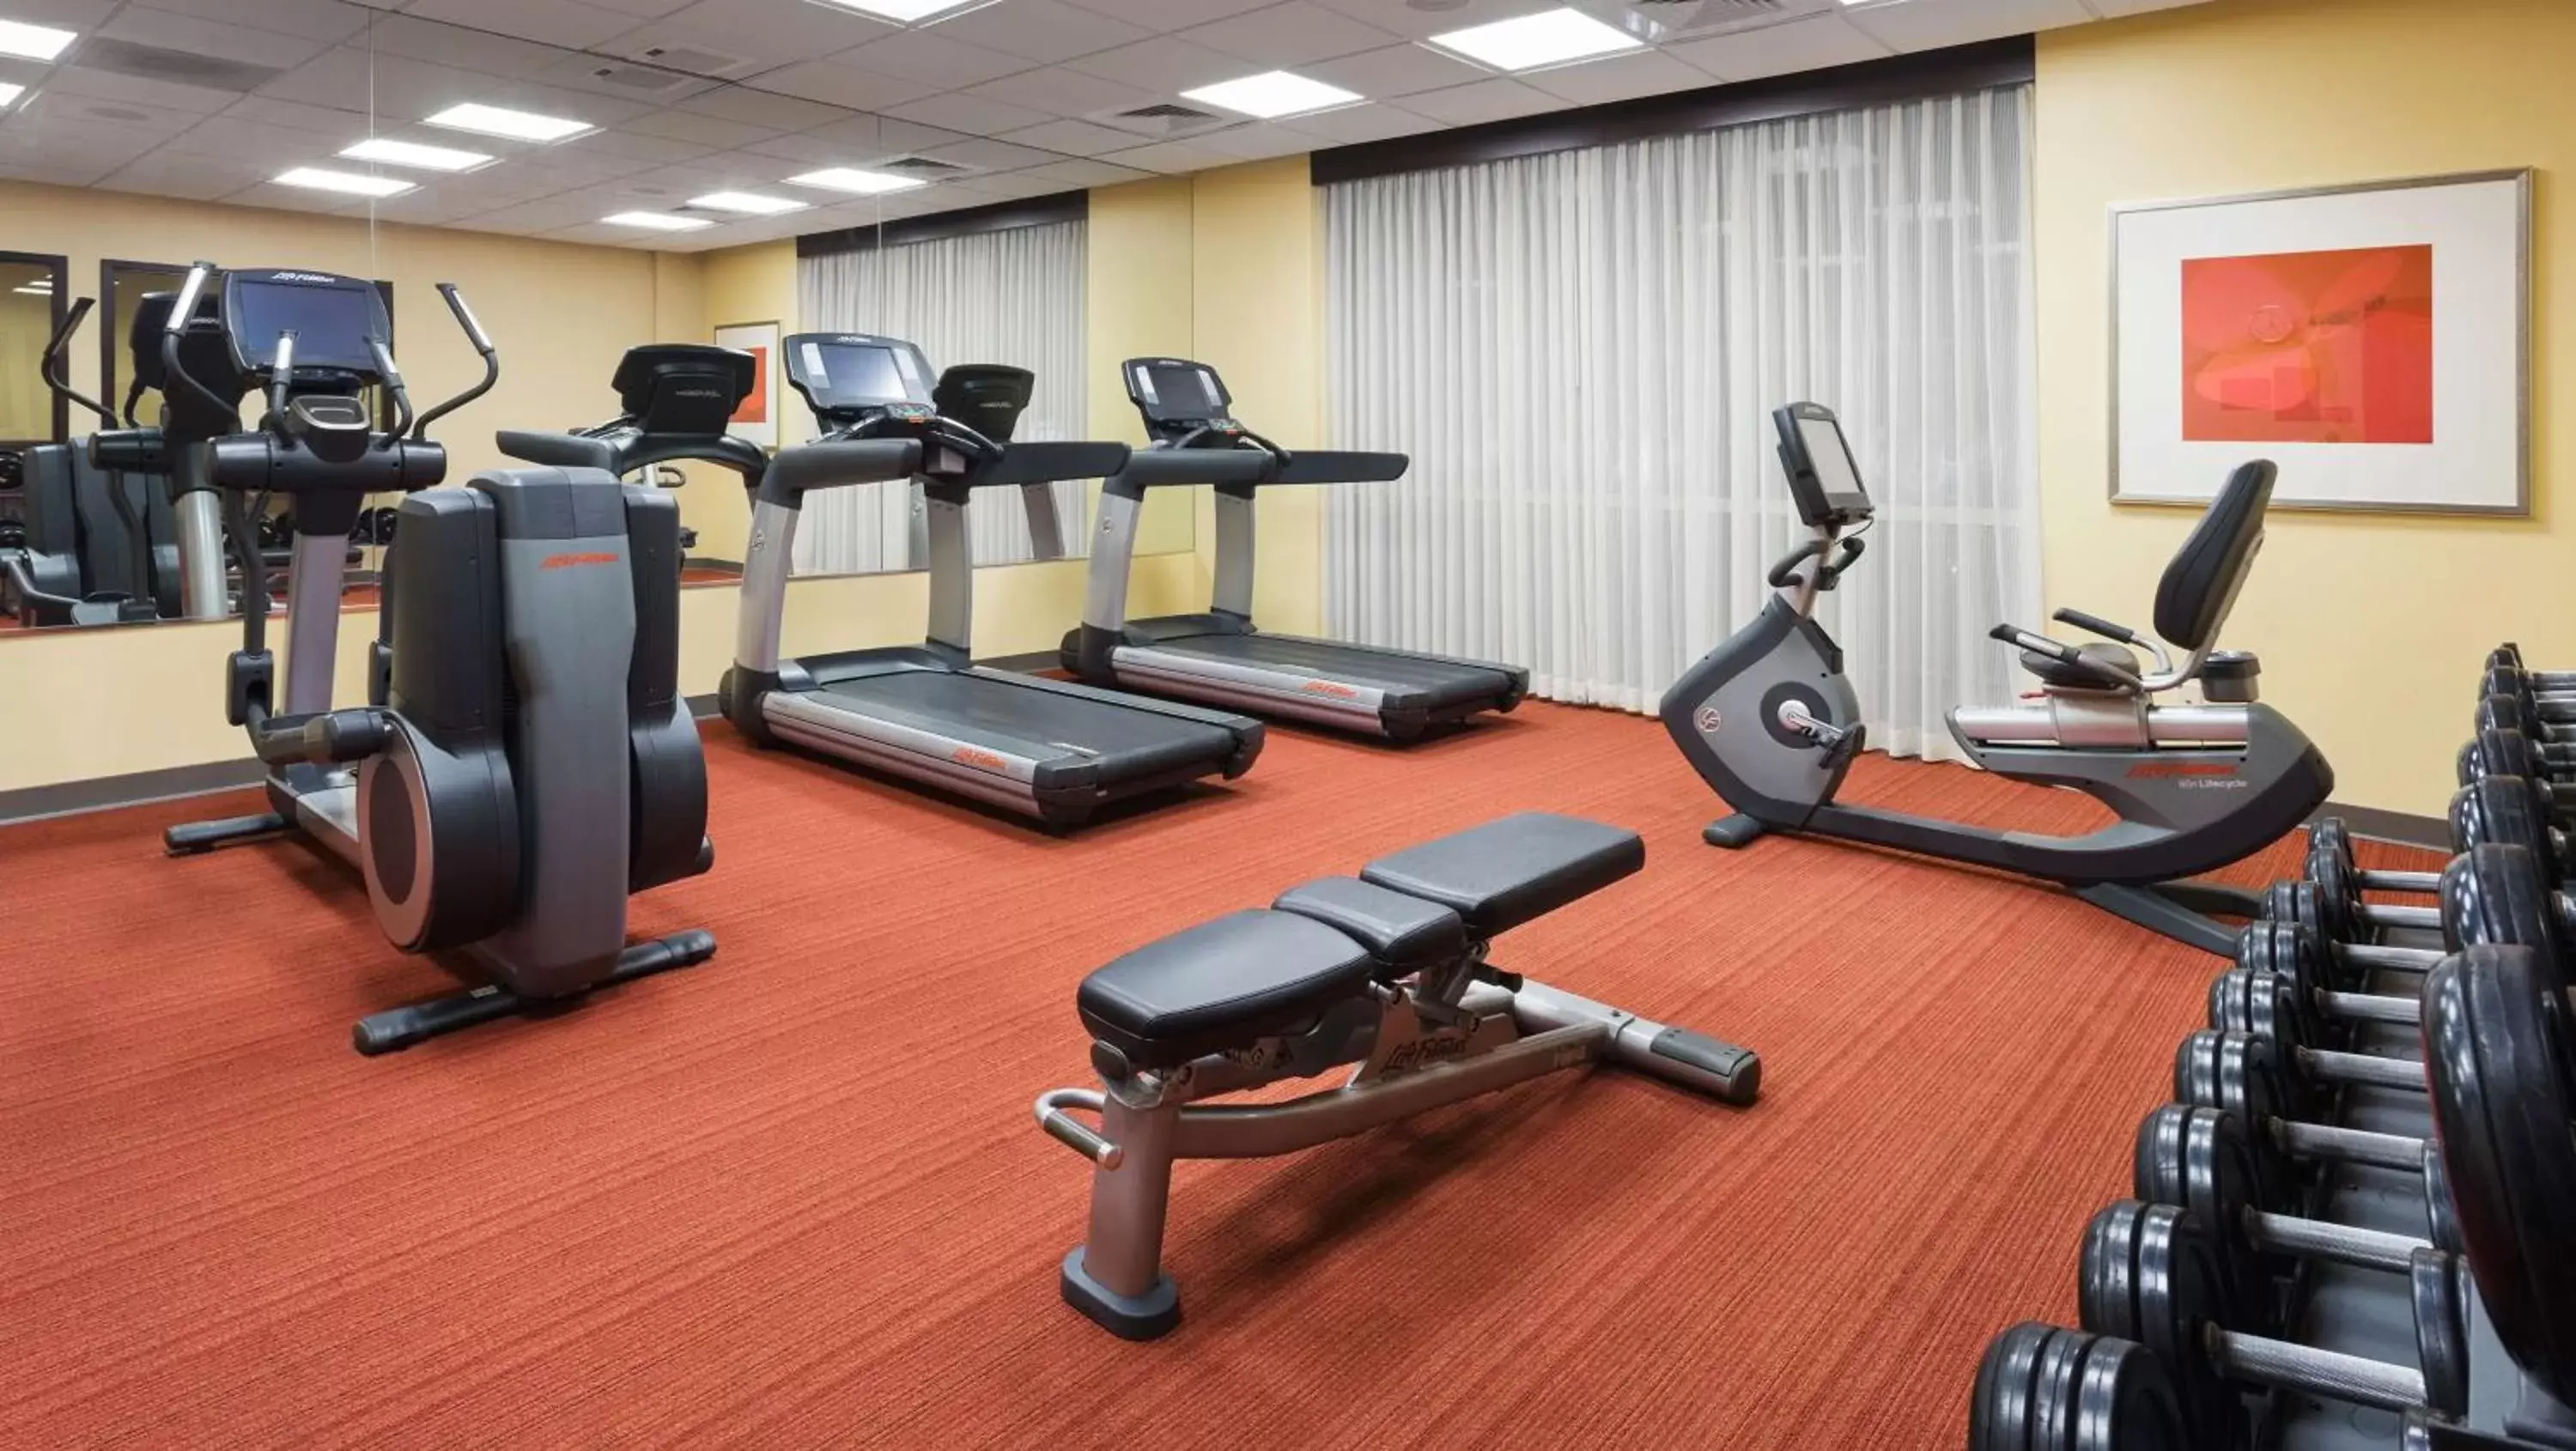 Fitness centre/facilities, Fitness Center/Facilities in Hyatt Place Coconut Point